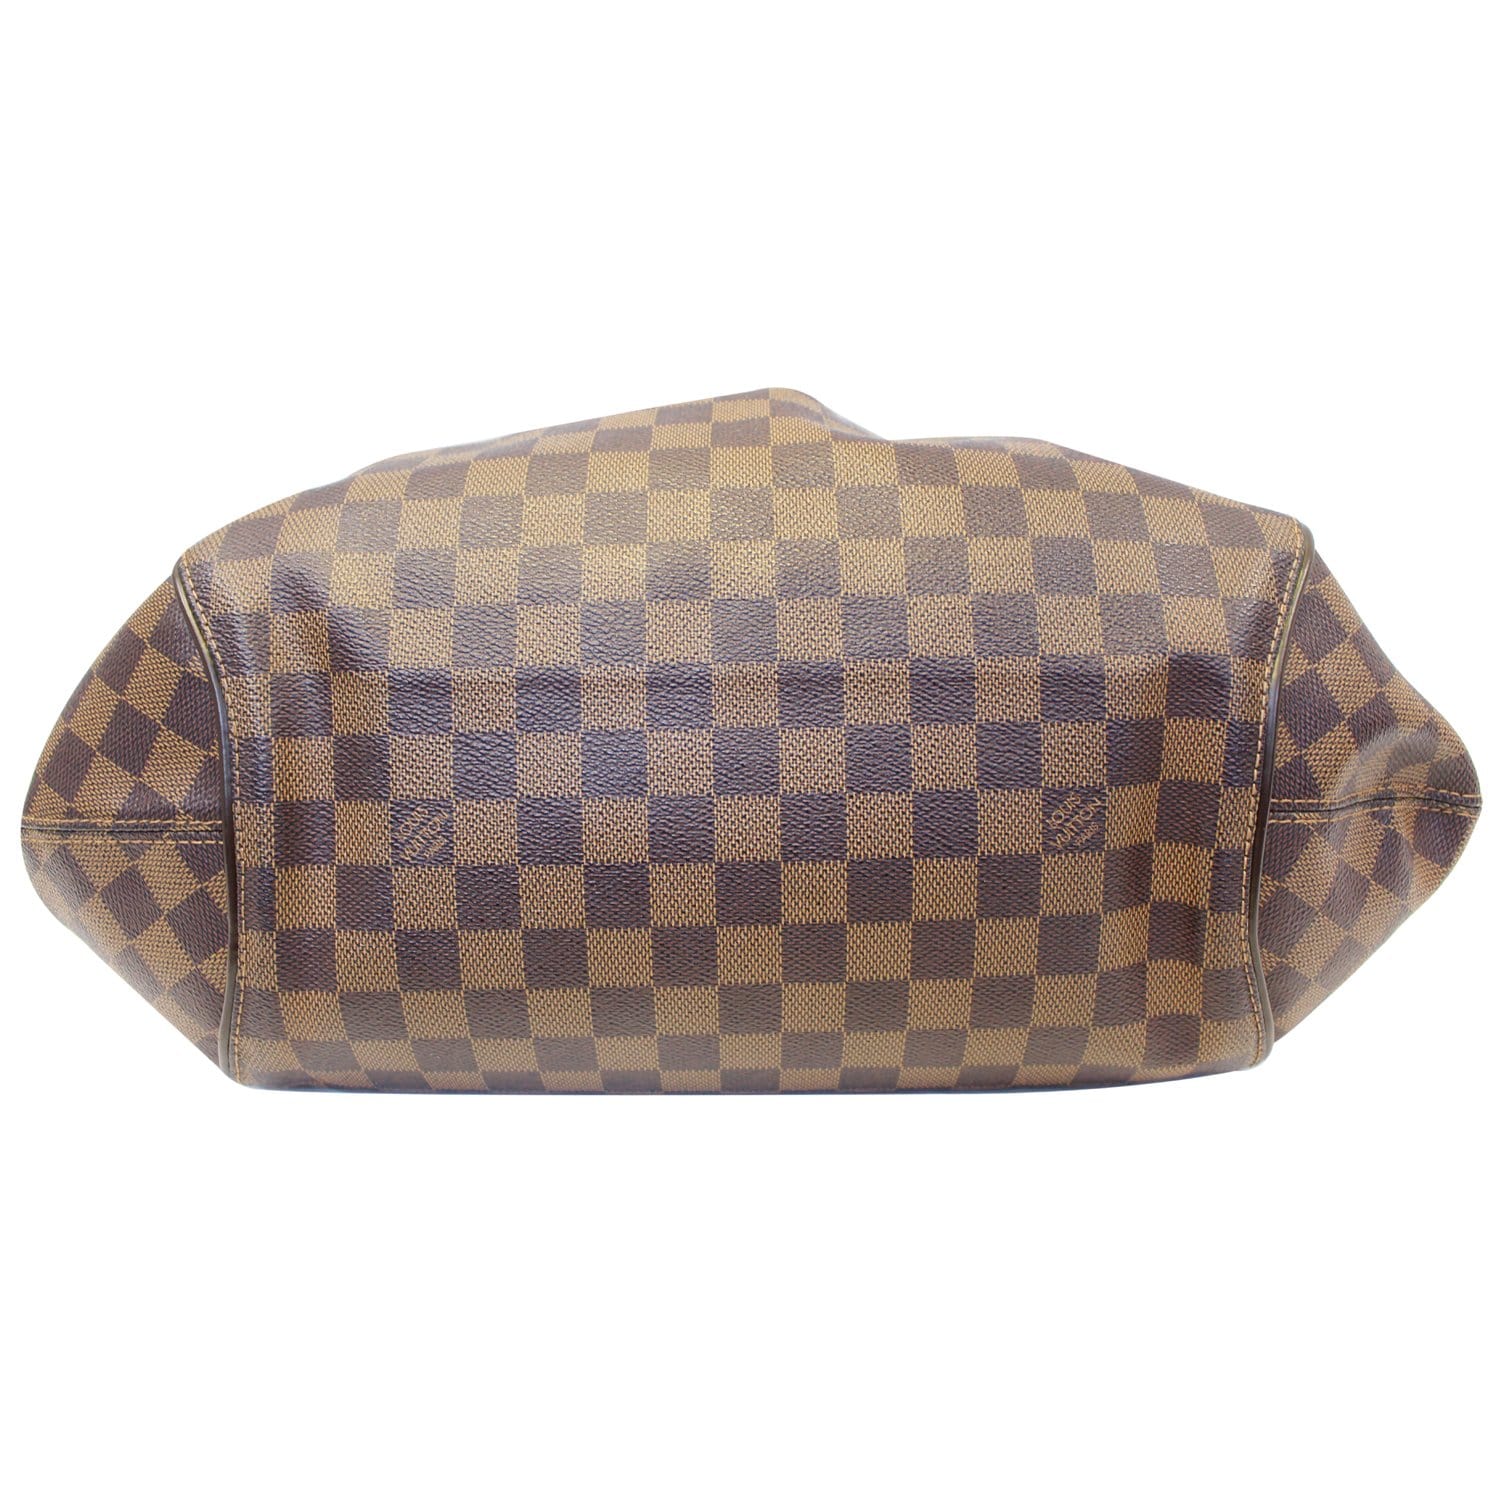 Louis Vuitton Damier Ebene Sistina PM Shoulder Bag 75lk328s